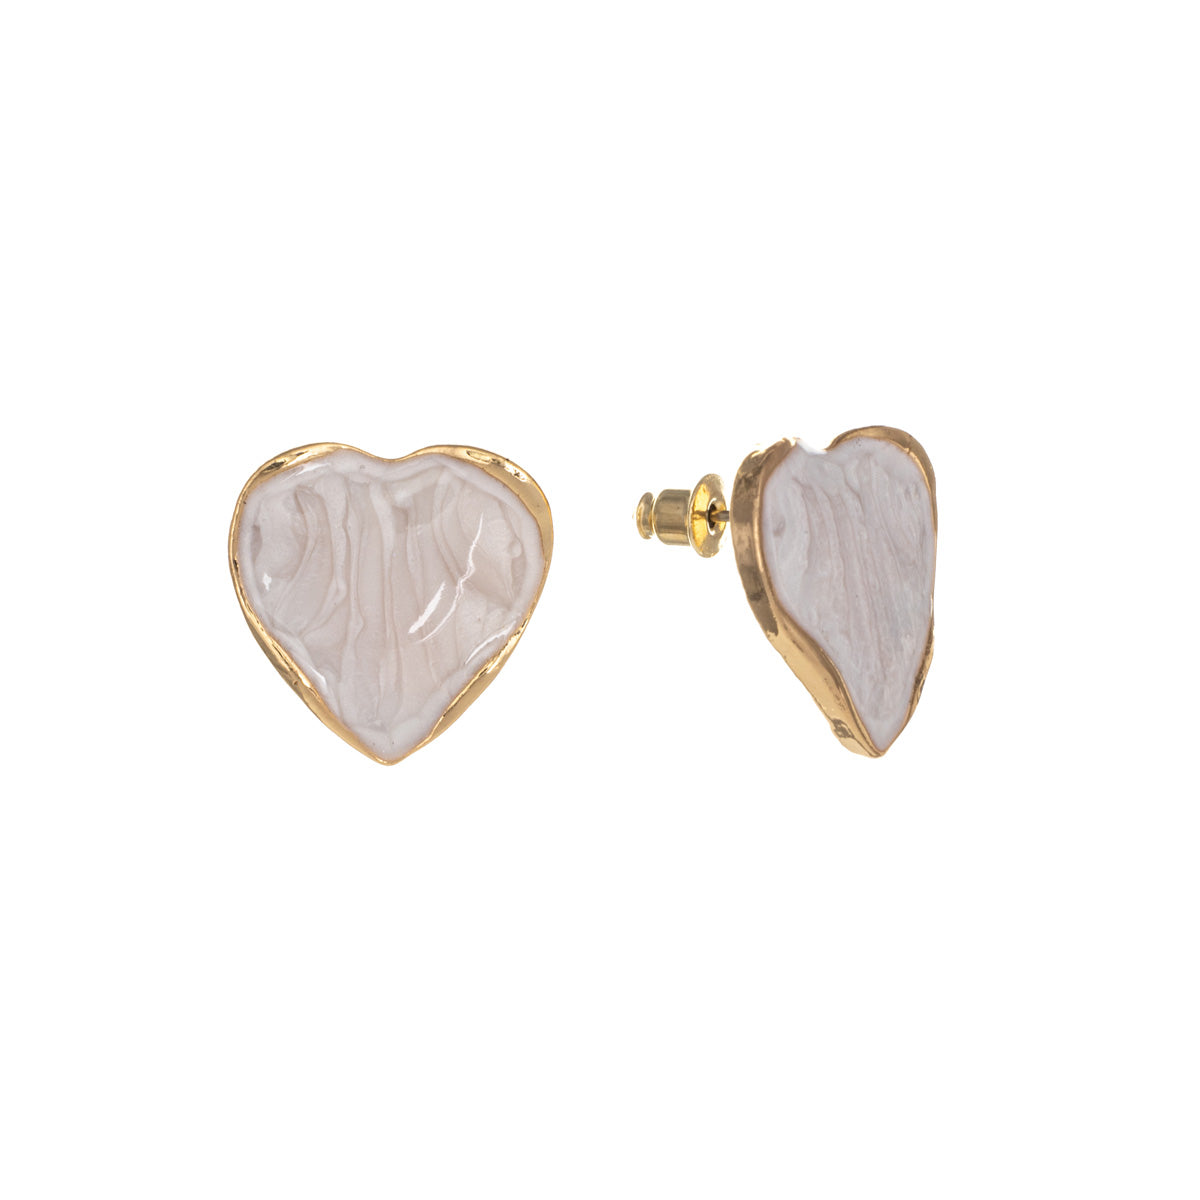 Coloured heart earrings